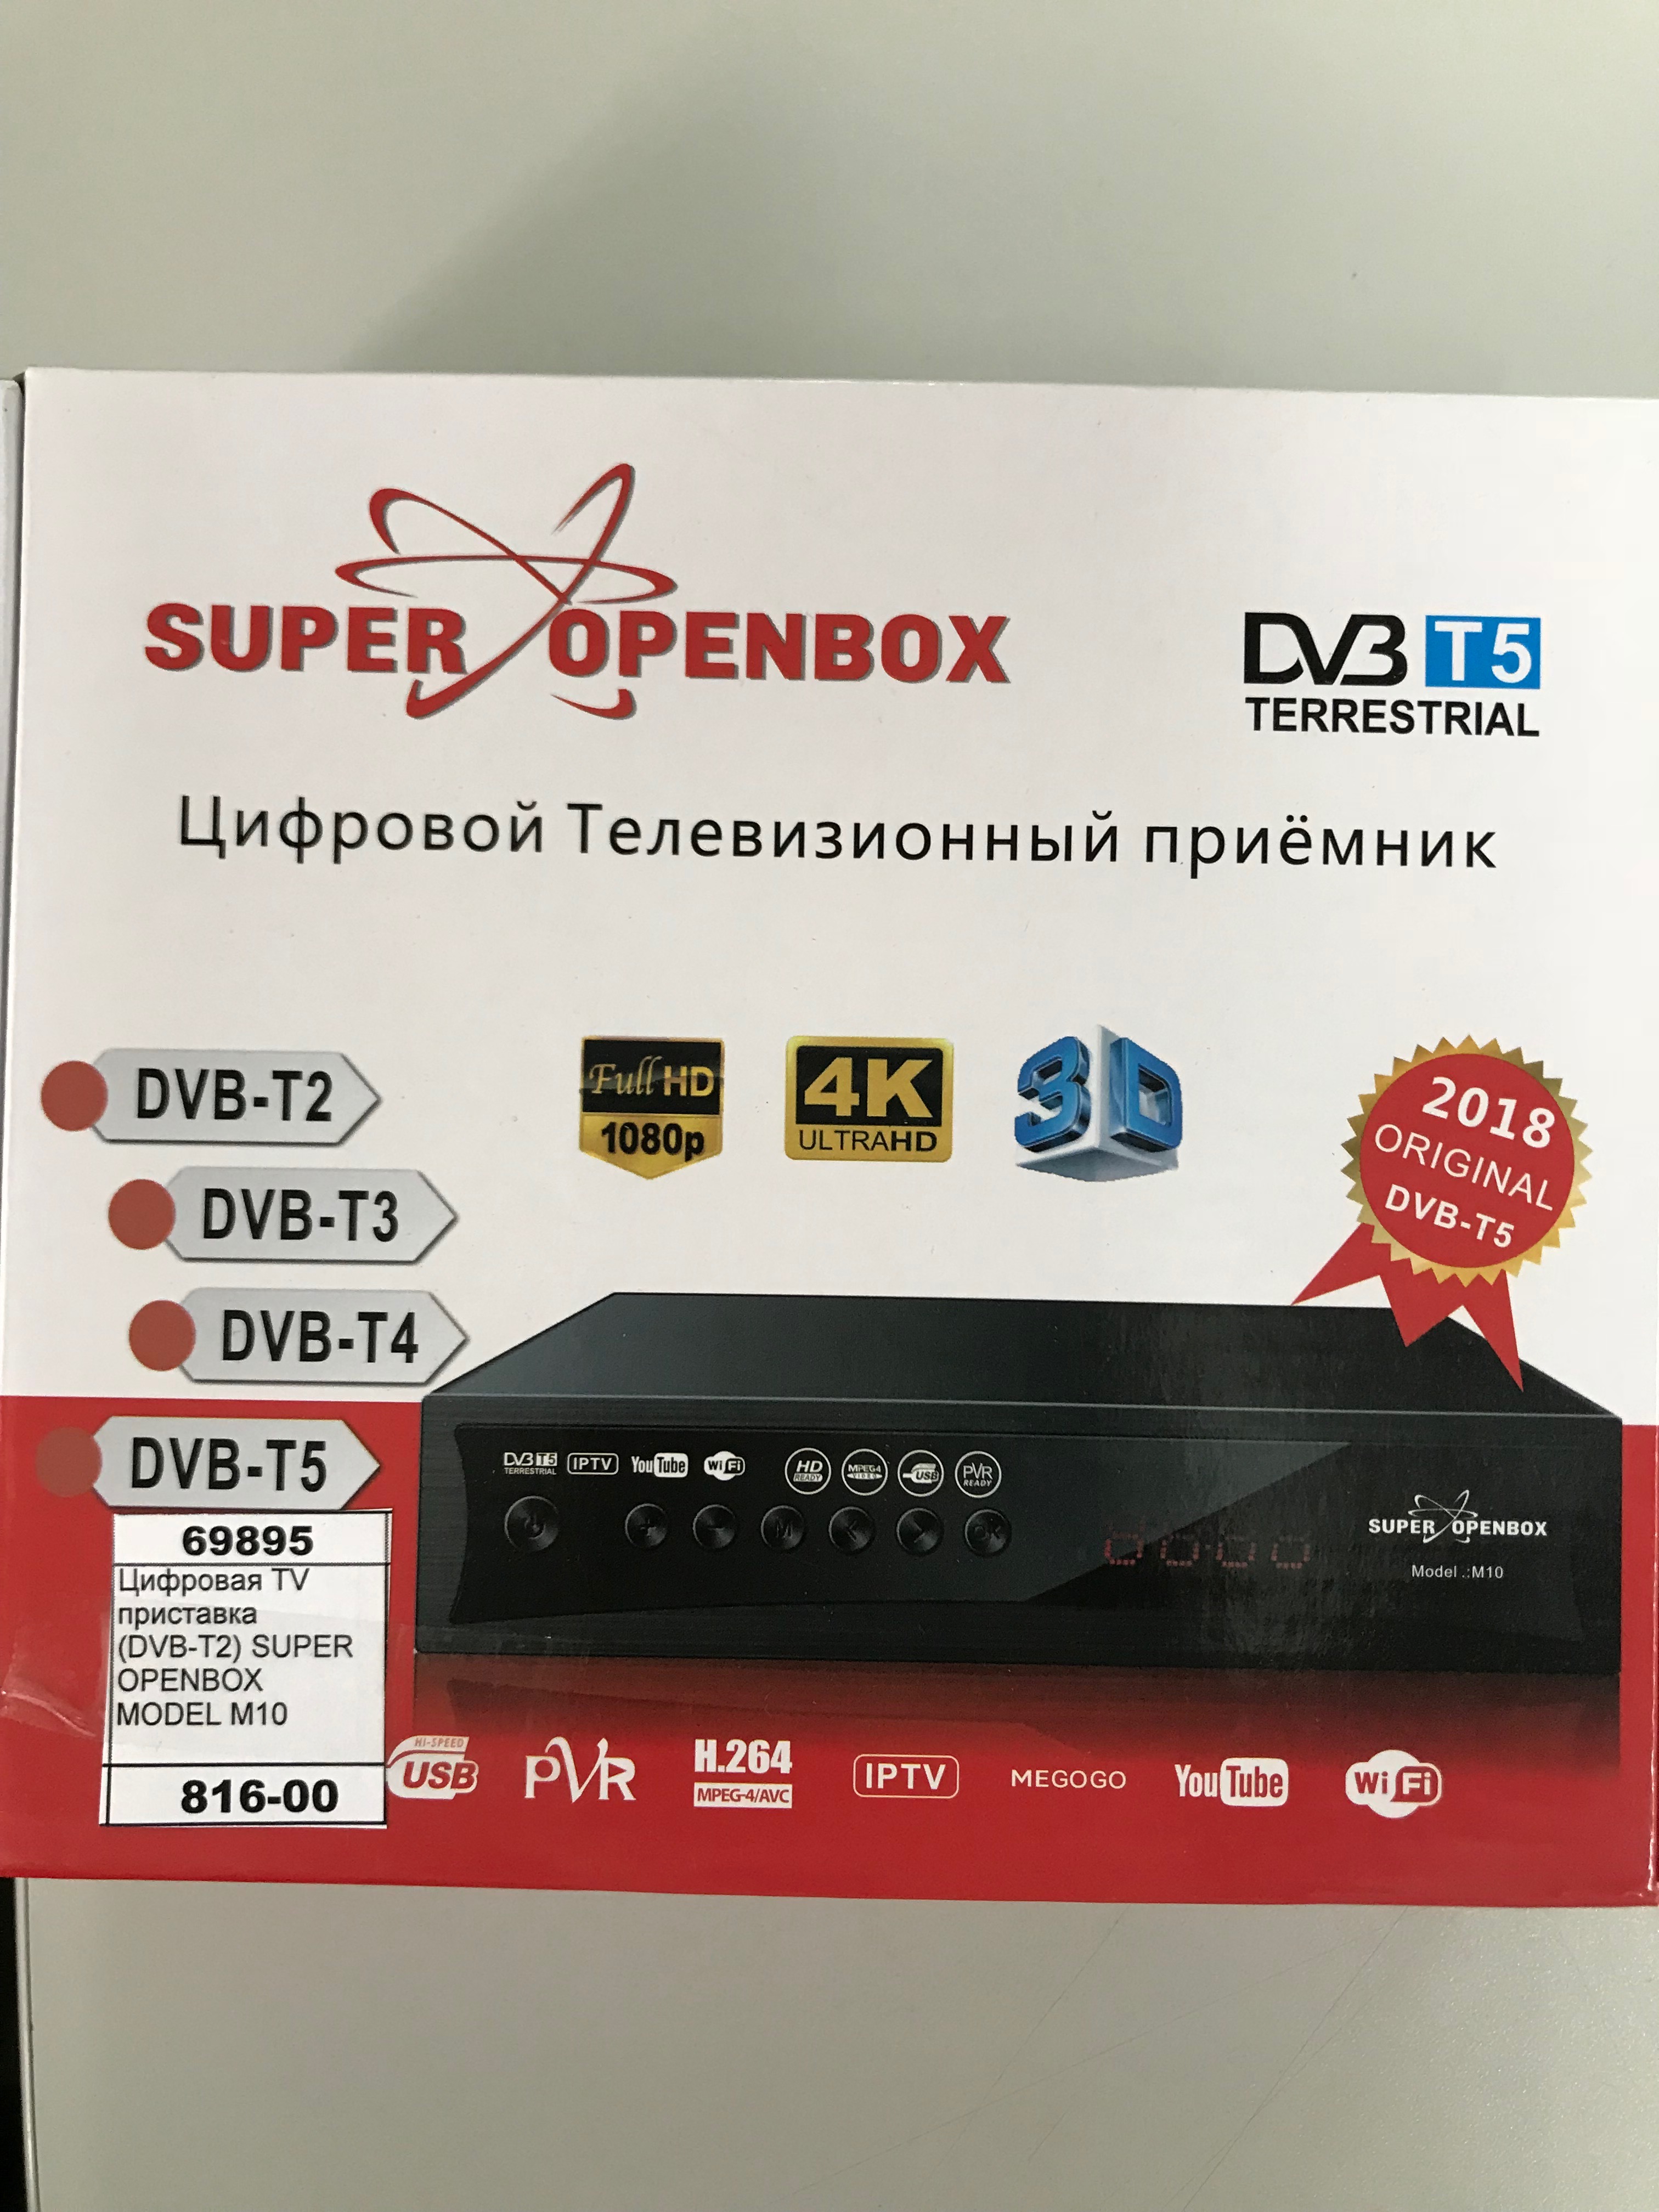 Цифровая TV приставка (DVB-T2) SUPER OPENBOX MODEL M10, USB